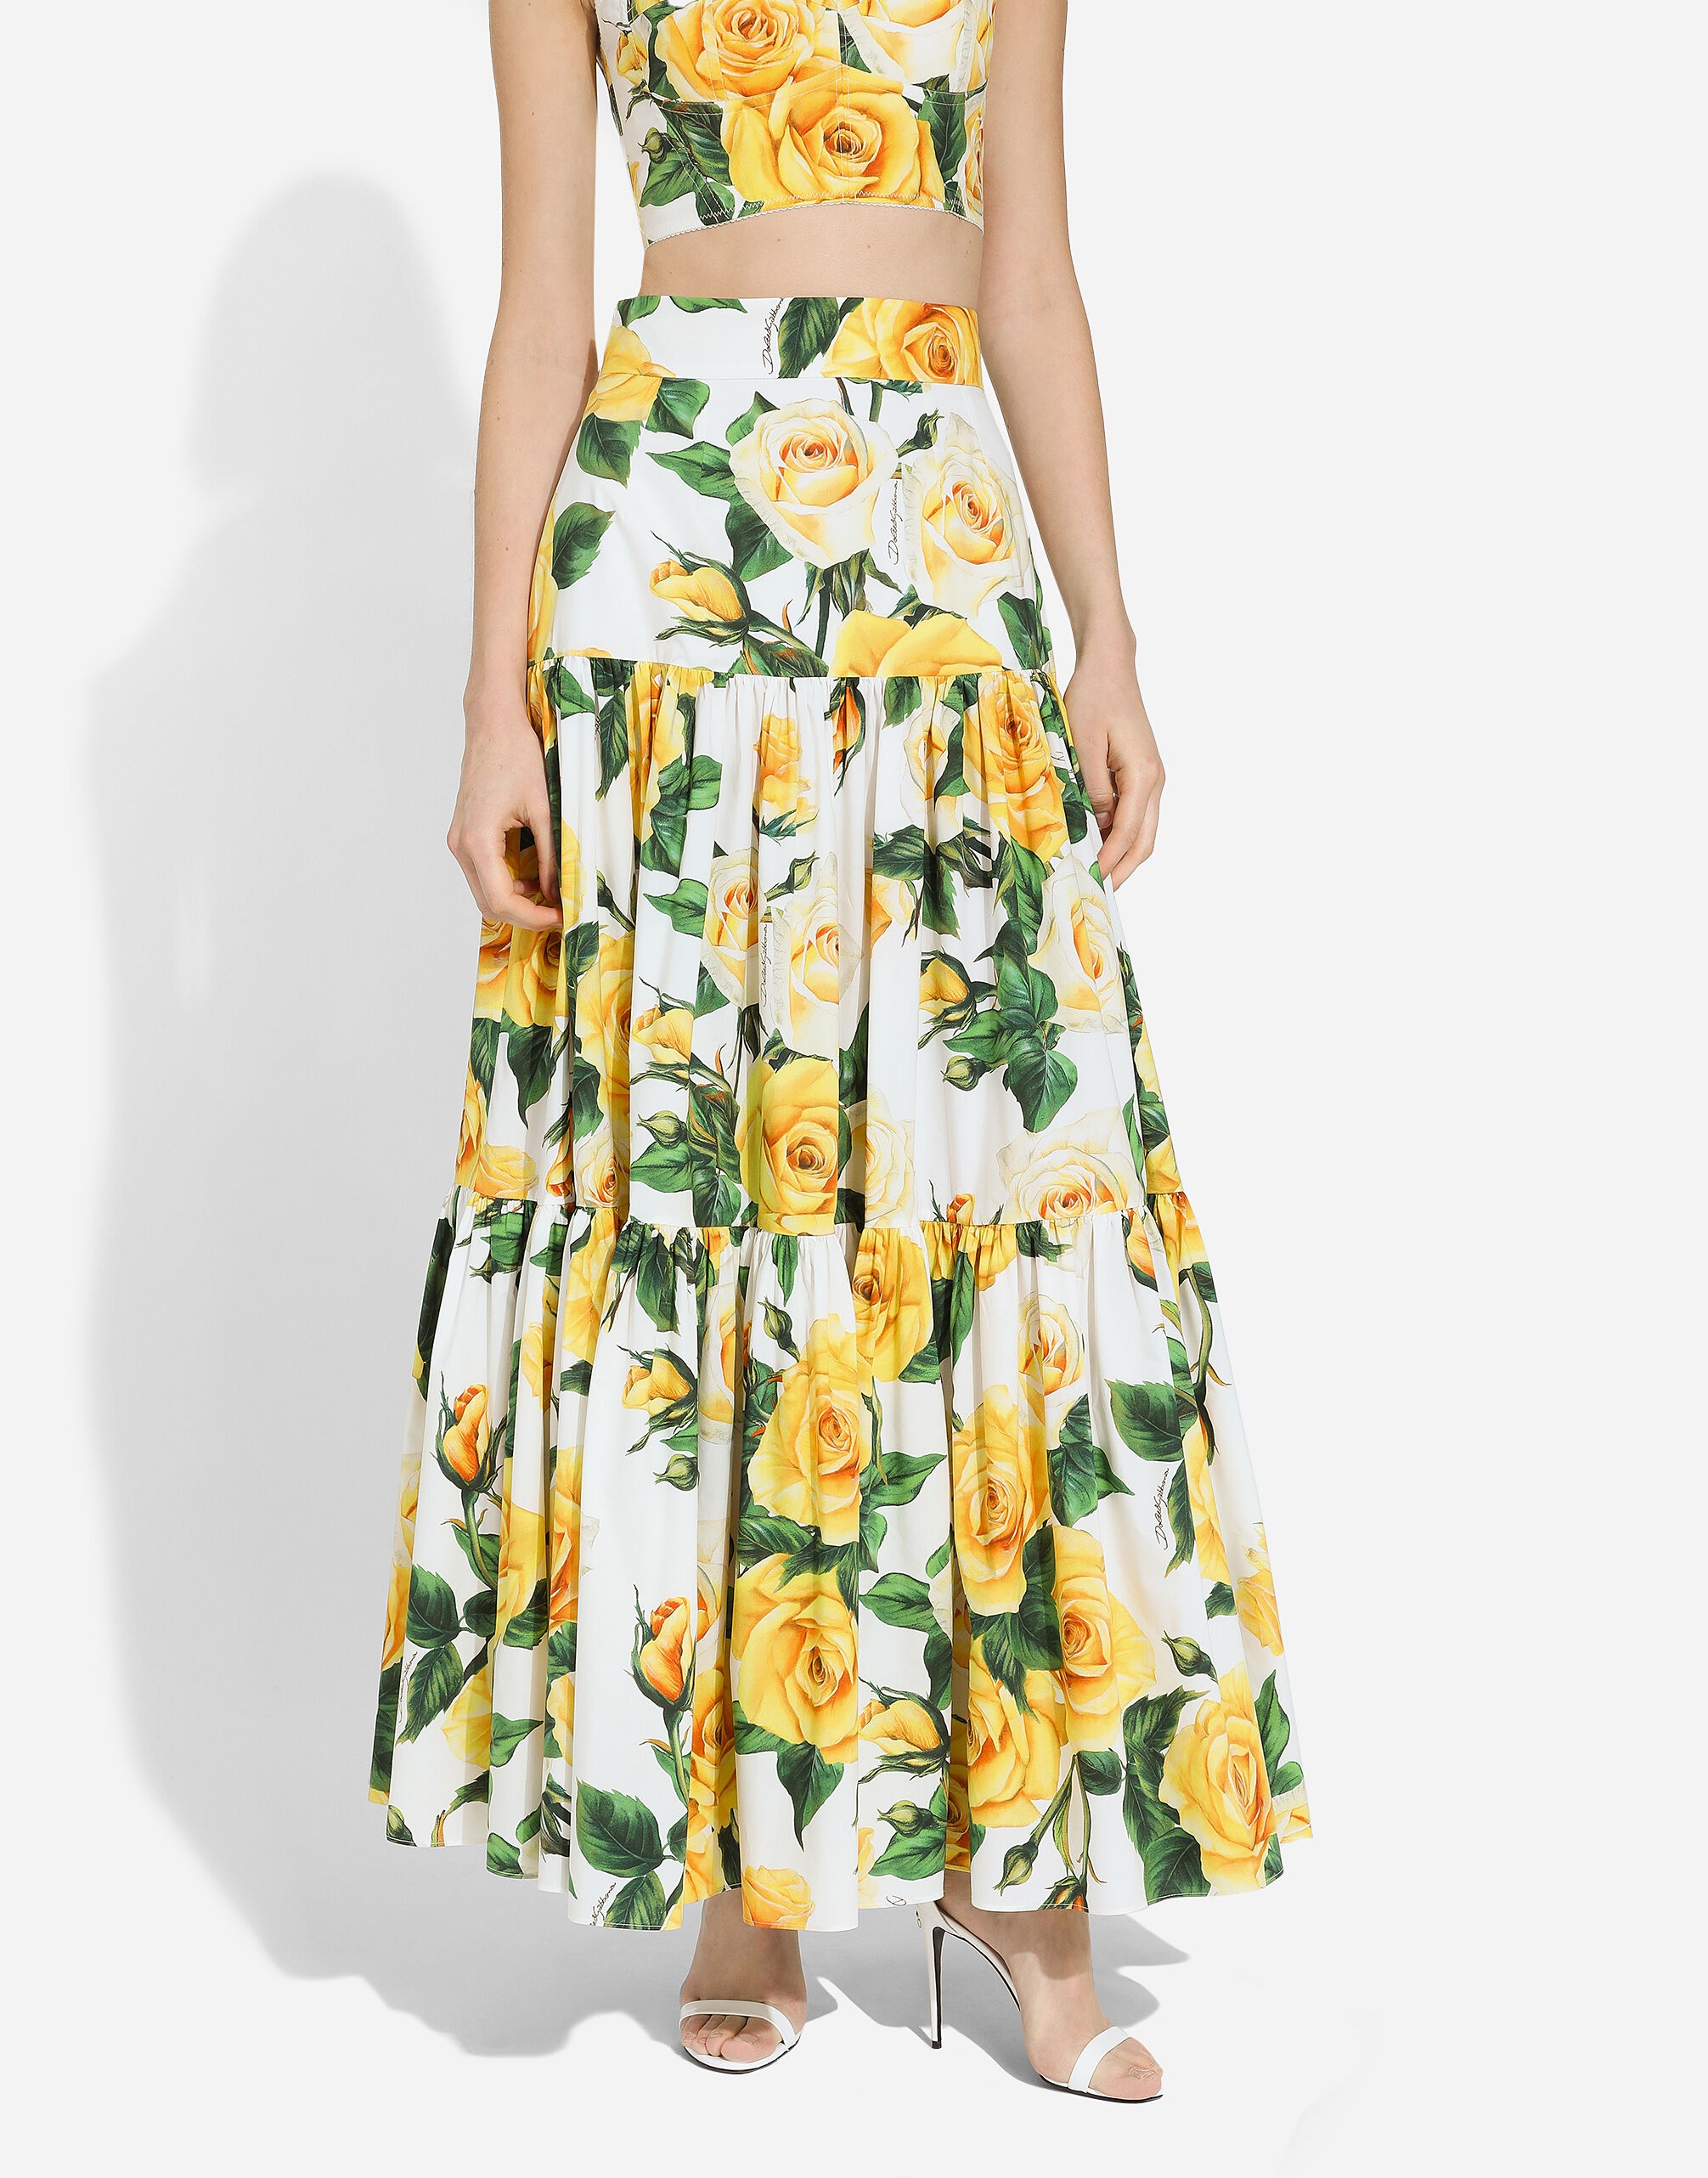 Long ruffled skirt in yellow rose-print cotton - 4